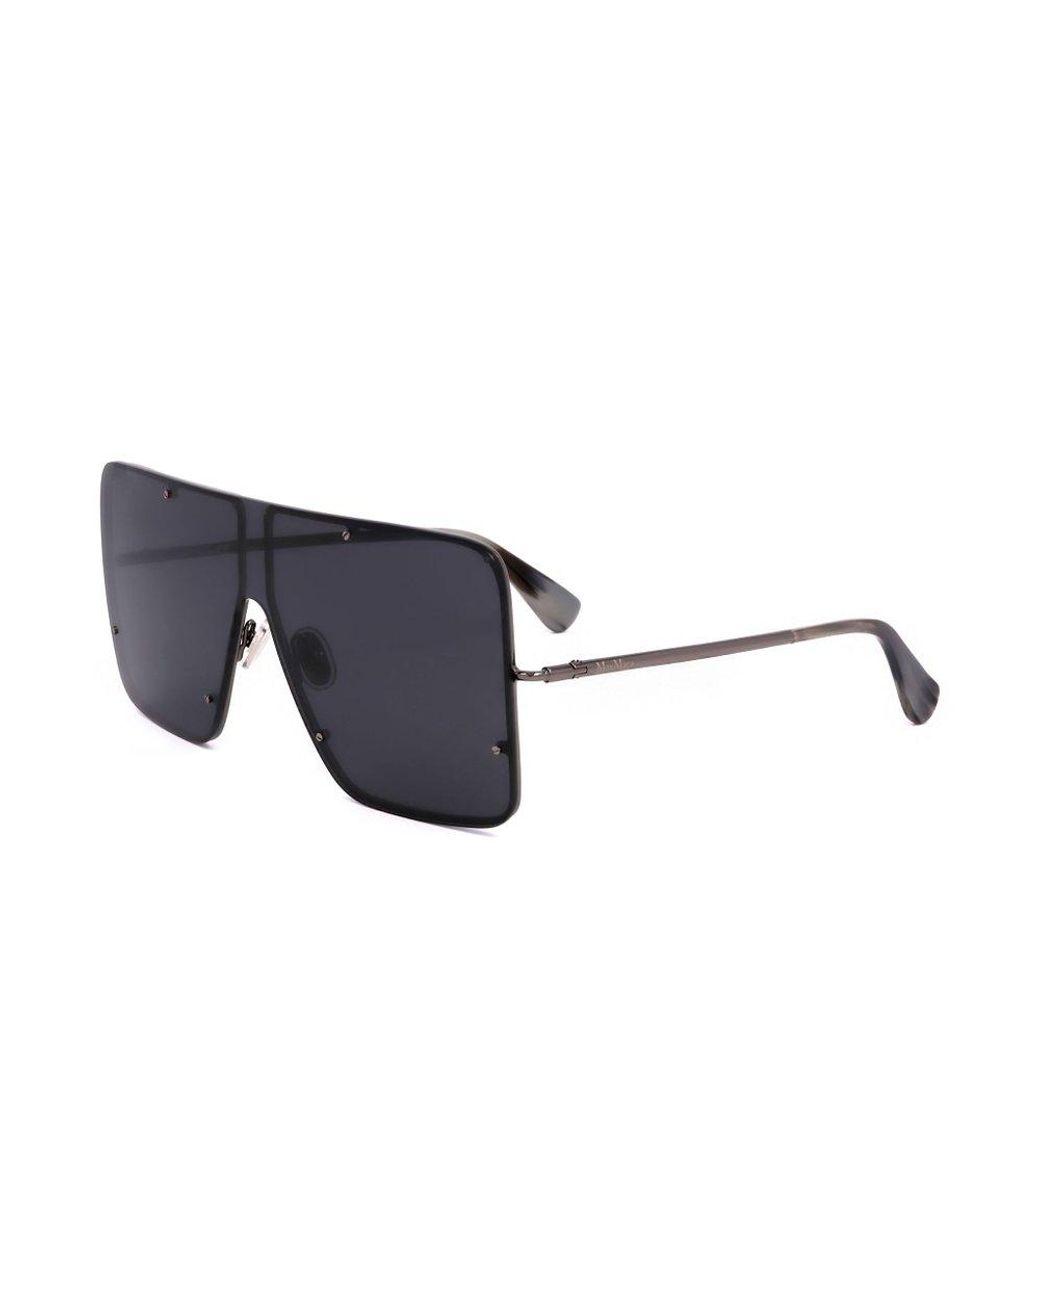 Max Mara Square Frame Sunglasses in Black | Lyst Canada